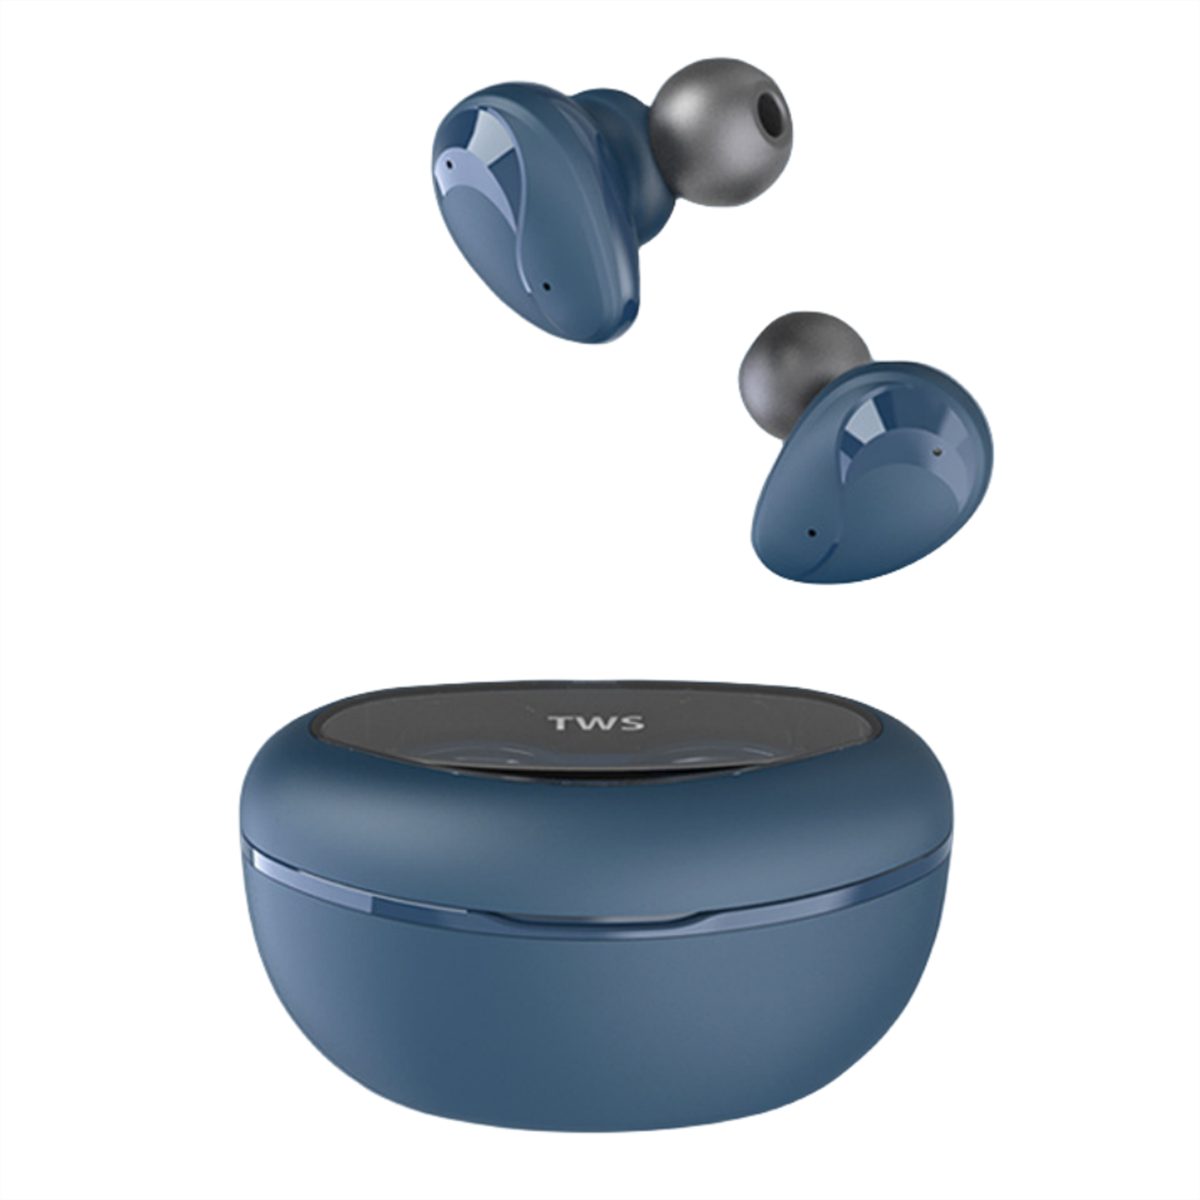 Stereo-Rauschunterdrückung LED-Anzeige, Blau selected Kabellose In-Ear-Kopfhörer, carefully In-Ear-Kopfhörer